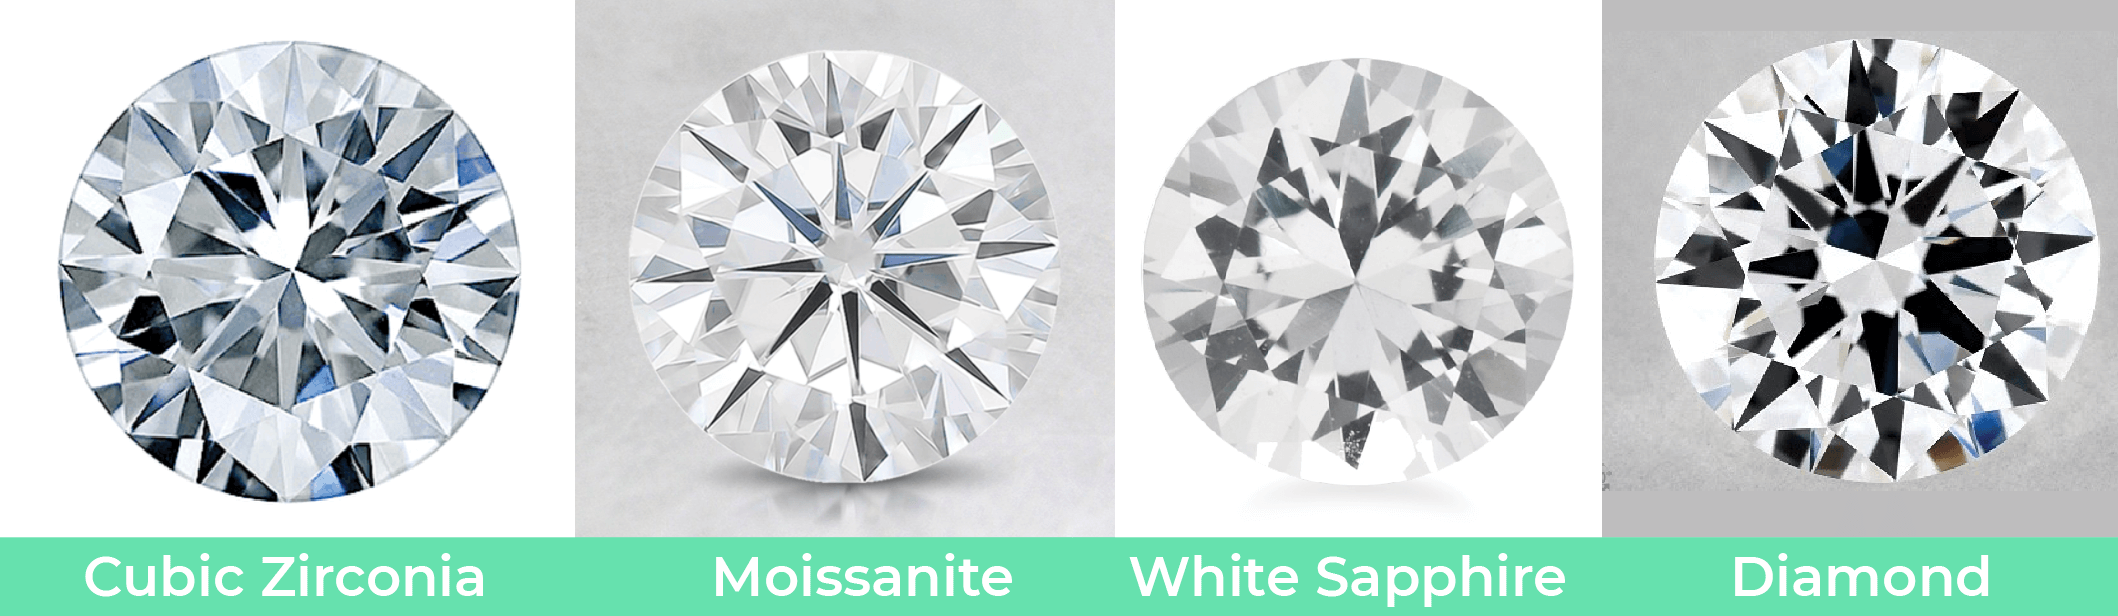 Real diamond vs cubic zirconia vs moissanite vs white sapphire